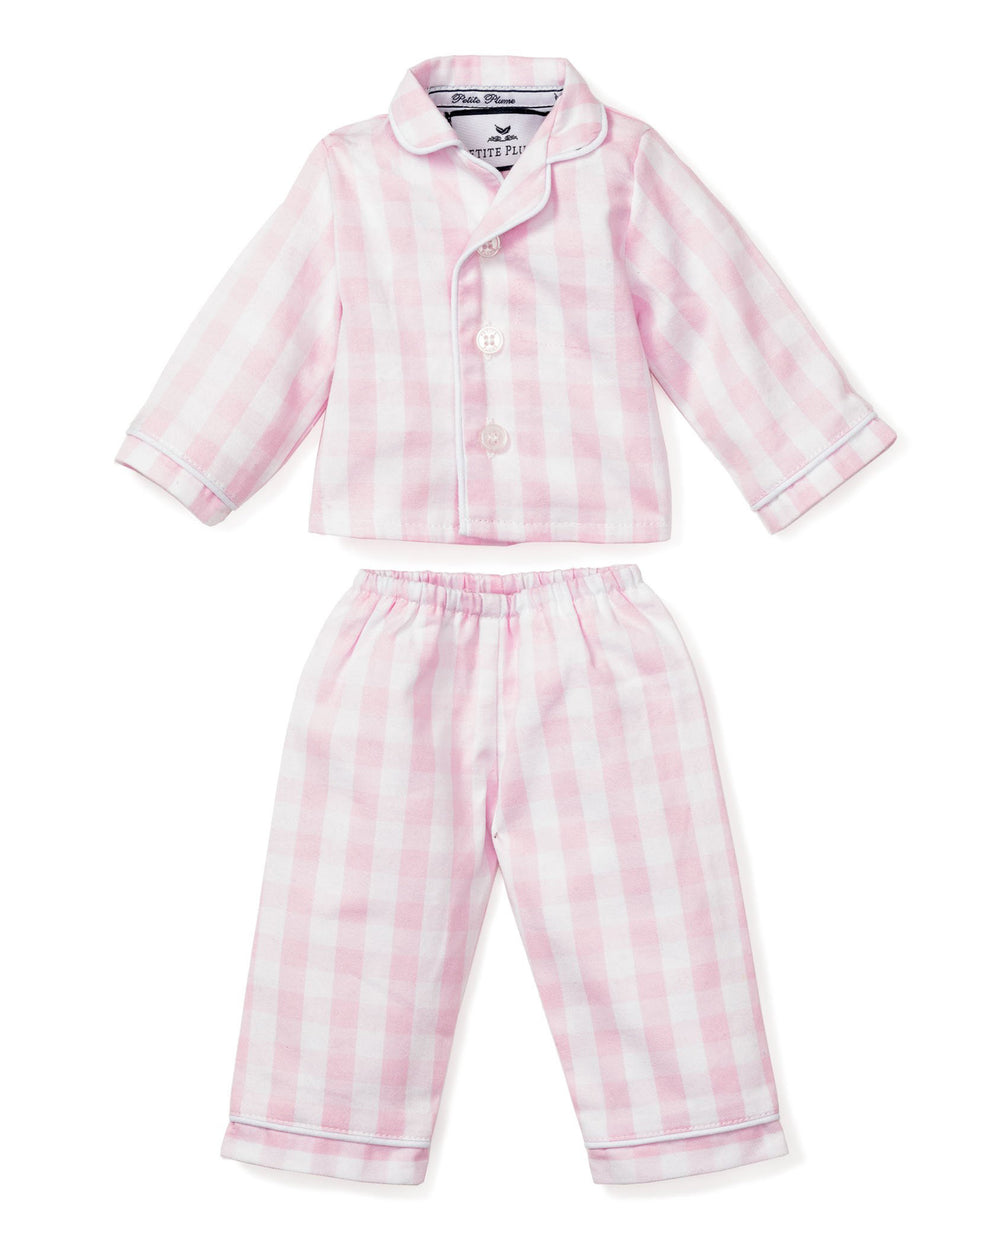 Petite Plume Pink Gingham Doll Pajama Set